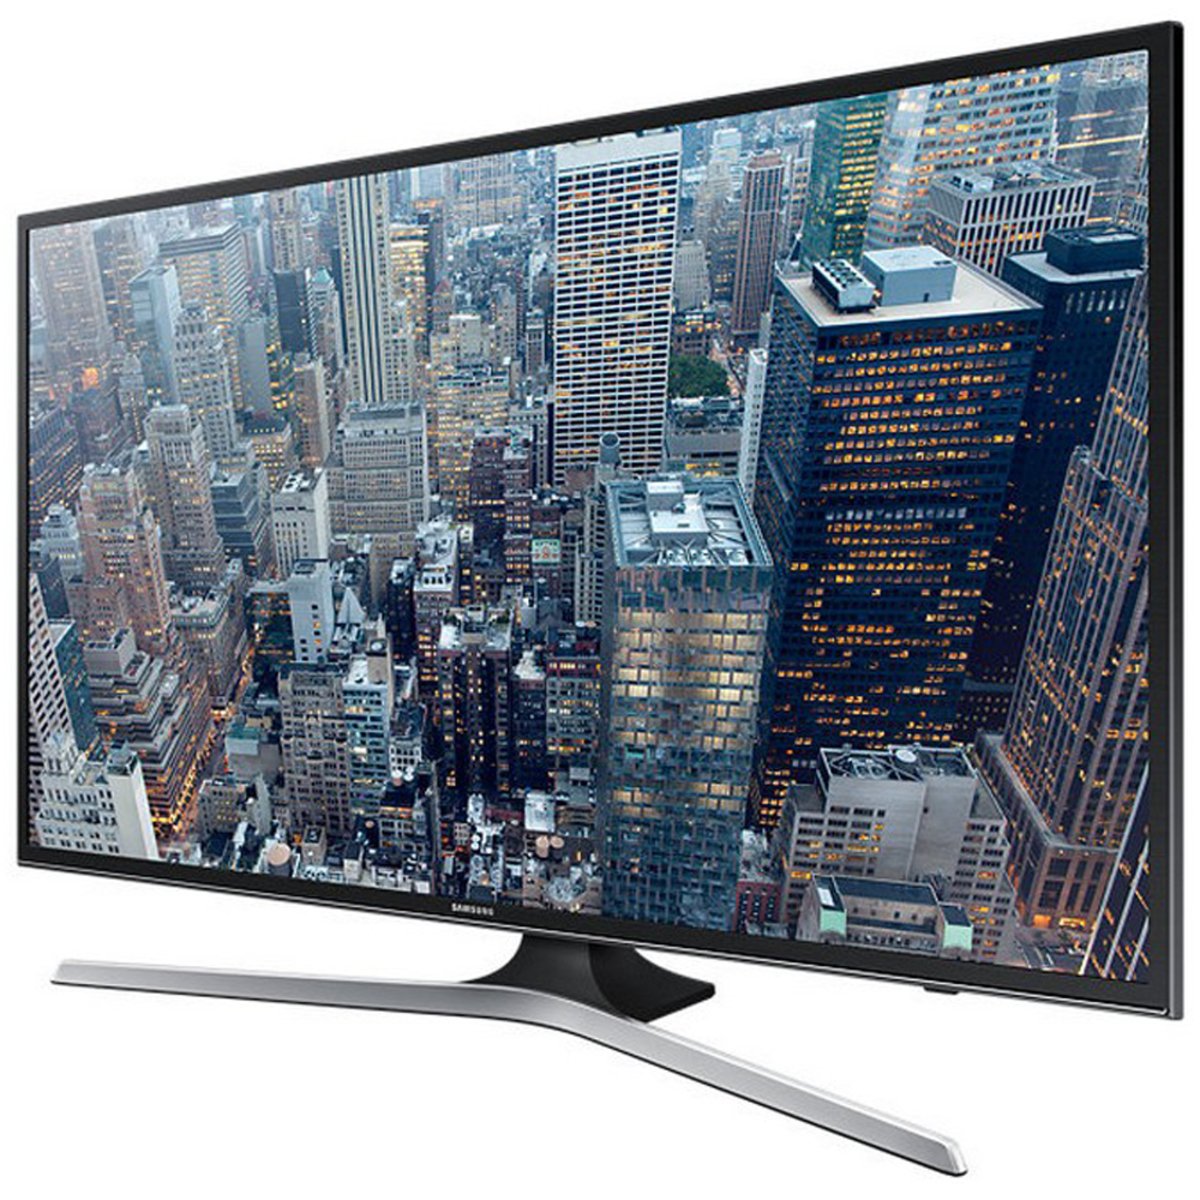 Samsung Smart Ultra HD TV 55JU6400 55inch